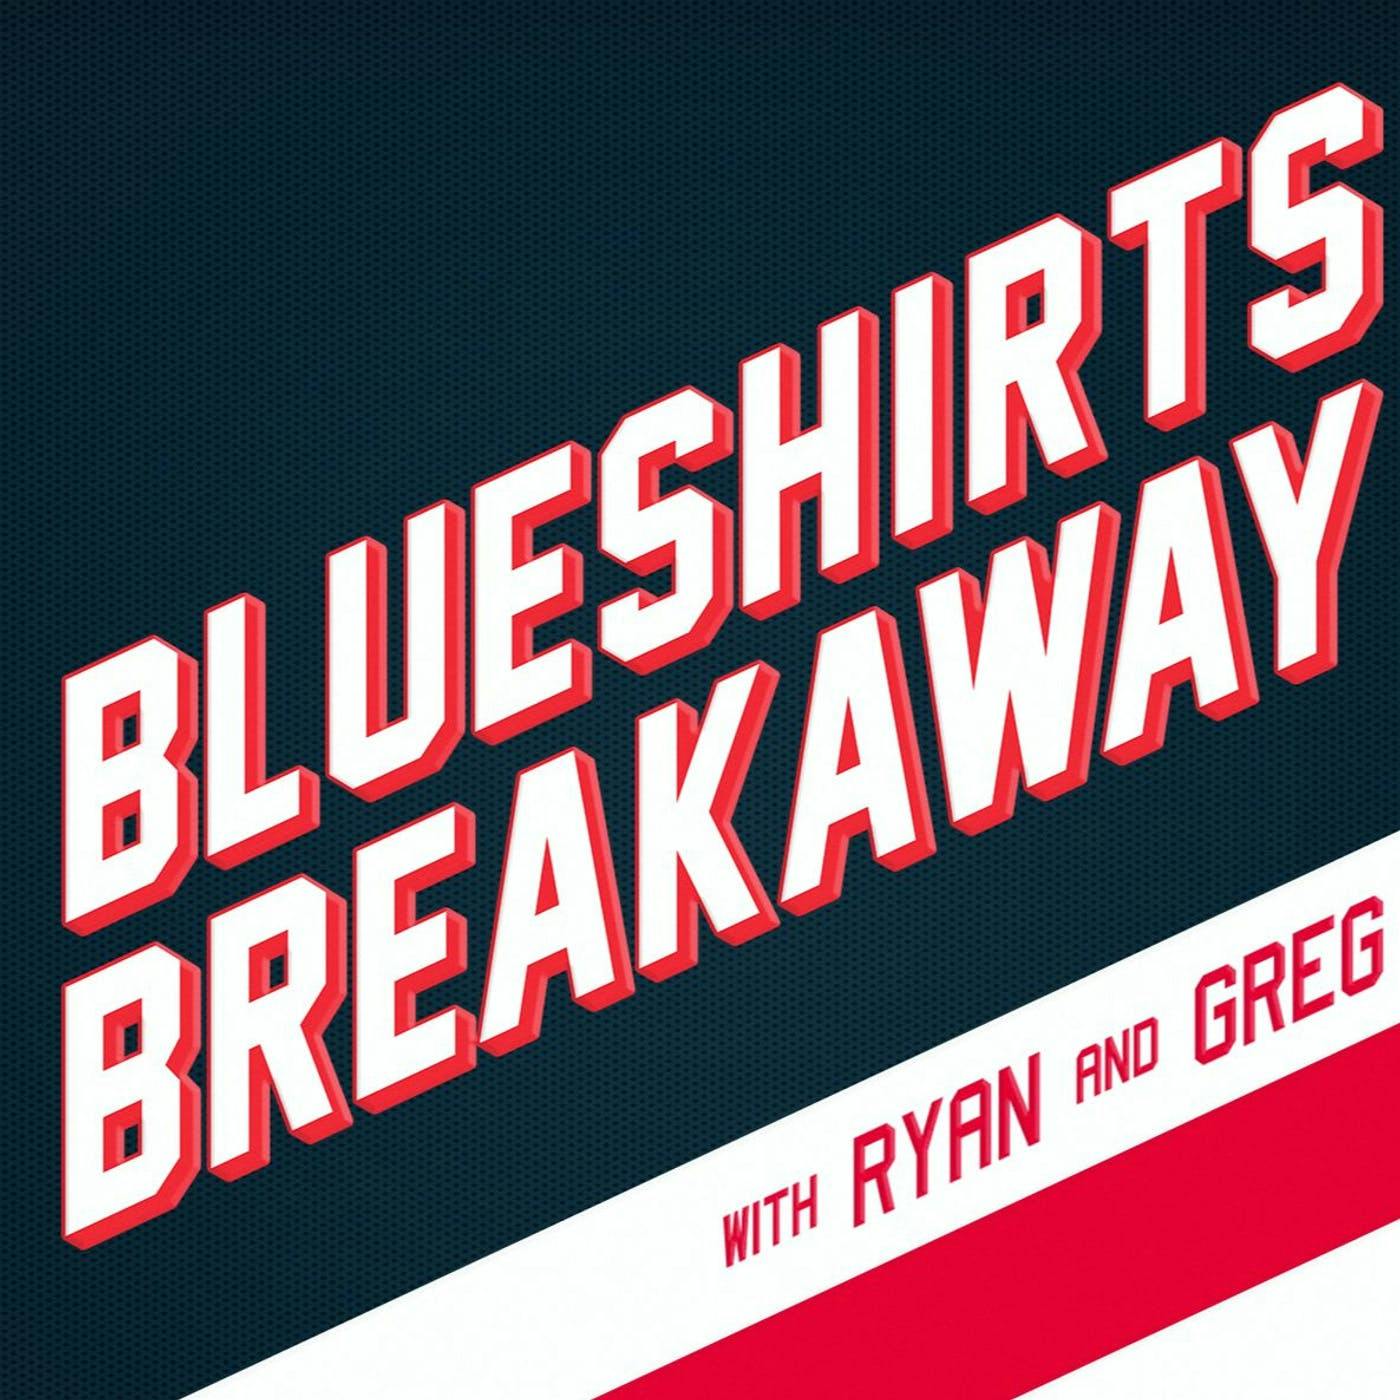 Blueshirts Breakaway - Episode 100 Special with Joe Fortunato & Bryan Wojtanik